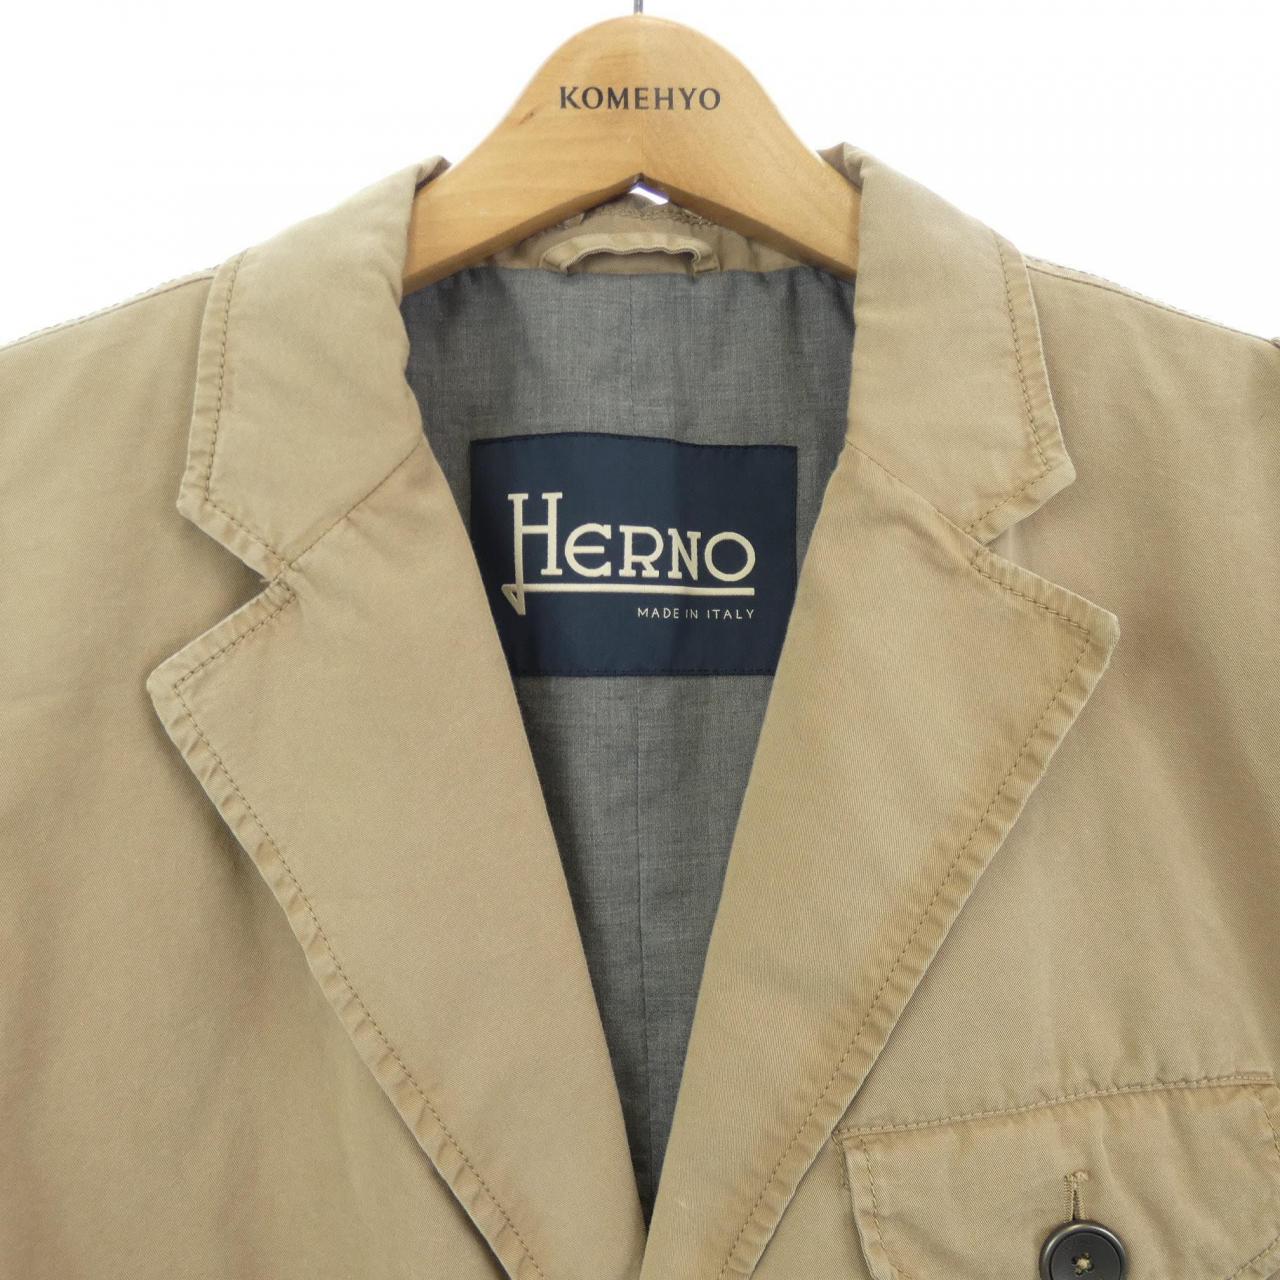 Herno jacket